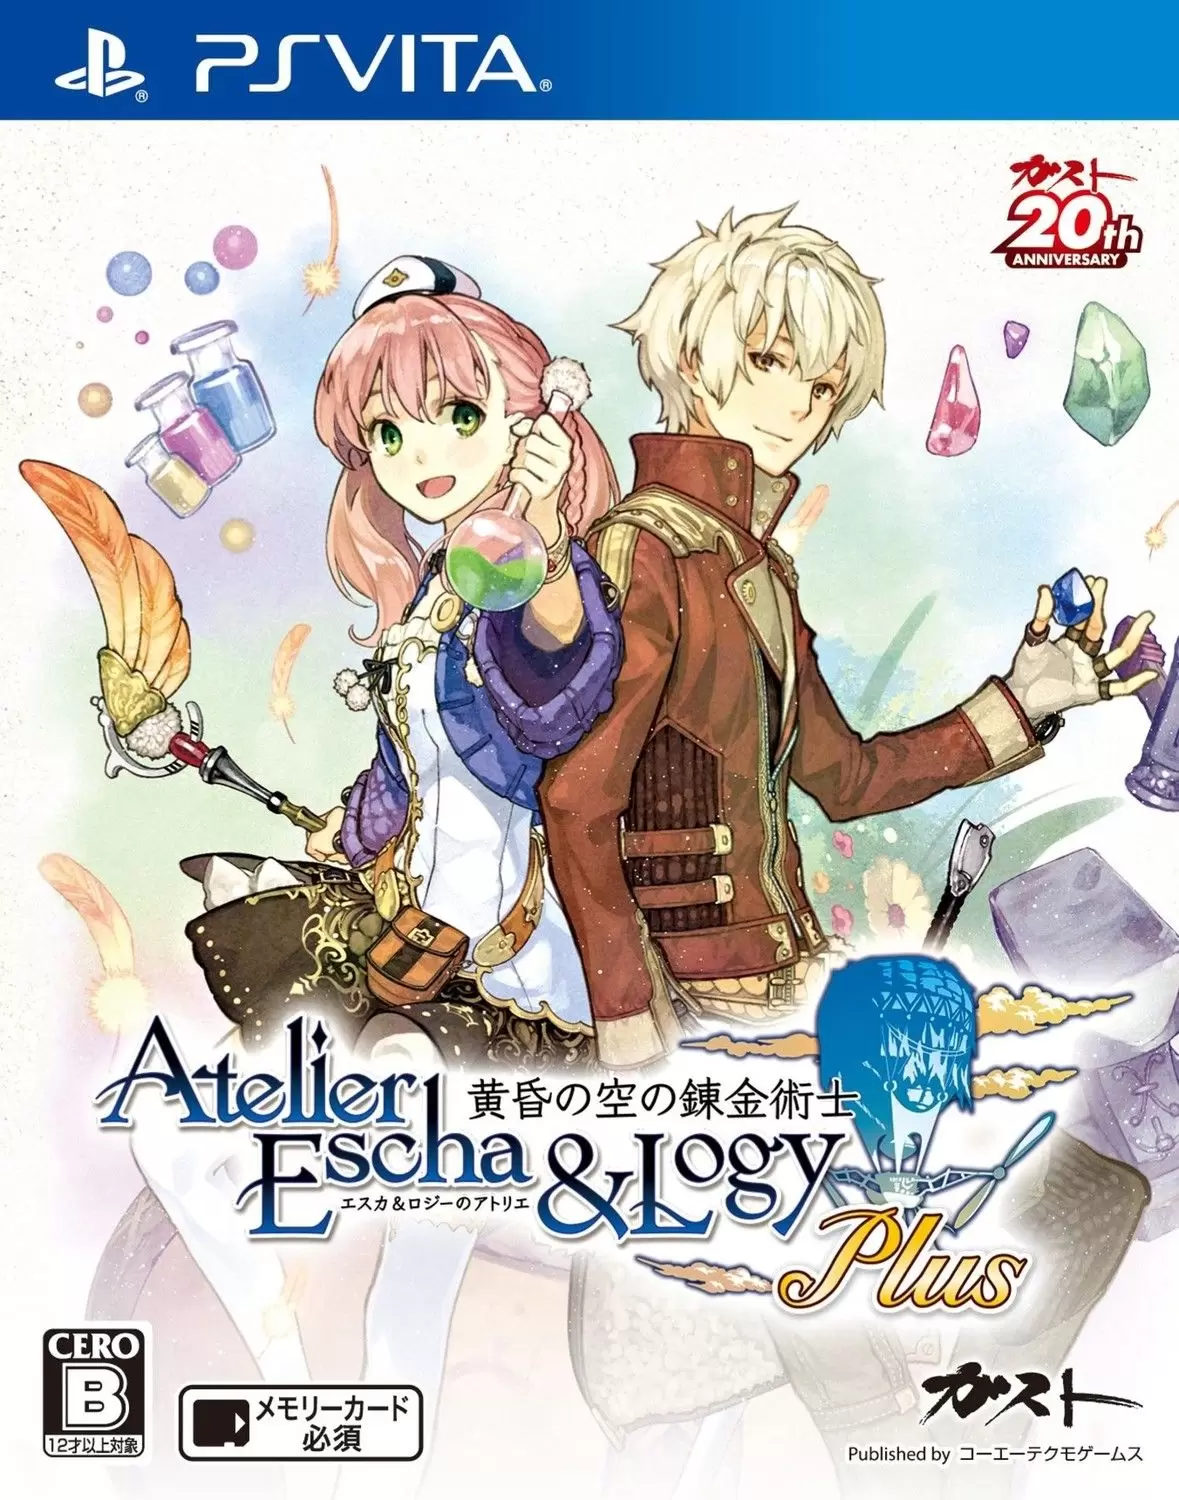 PS Vita Games - Atelier Escha & Logy Plus: Alchemist of Dusk Sky